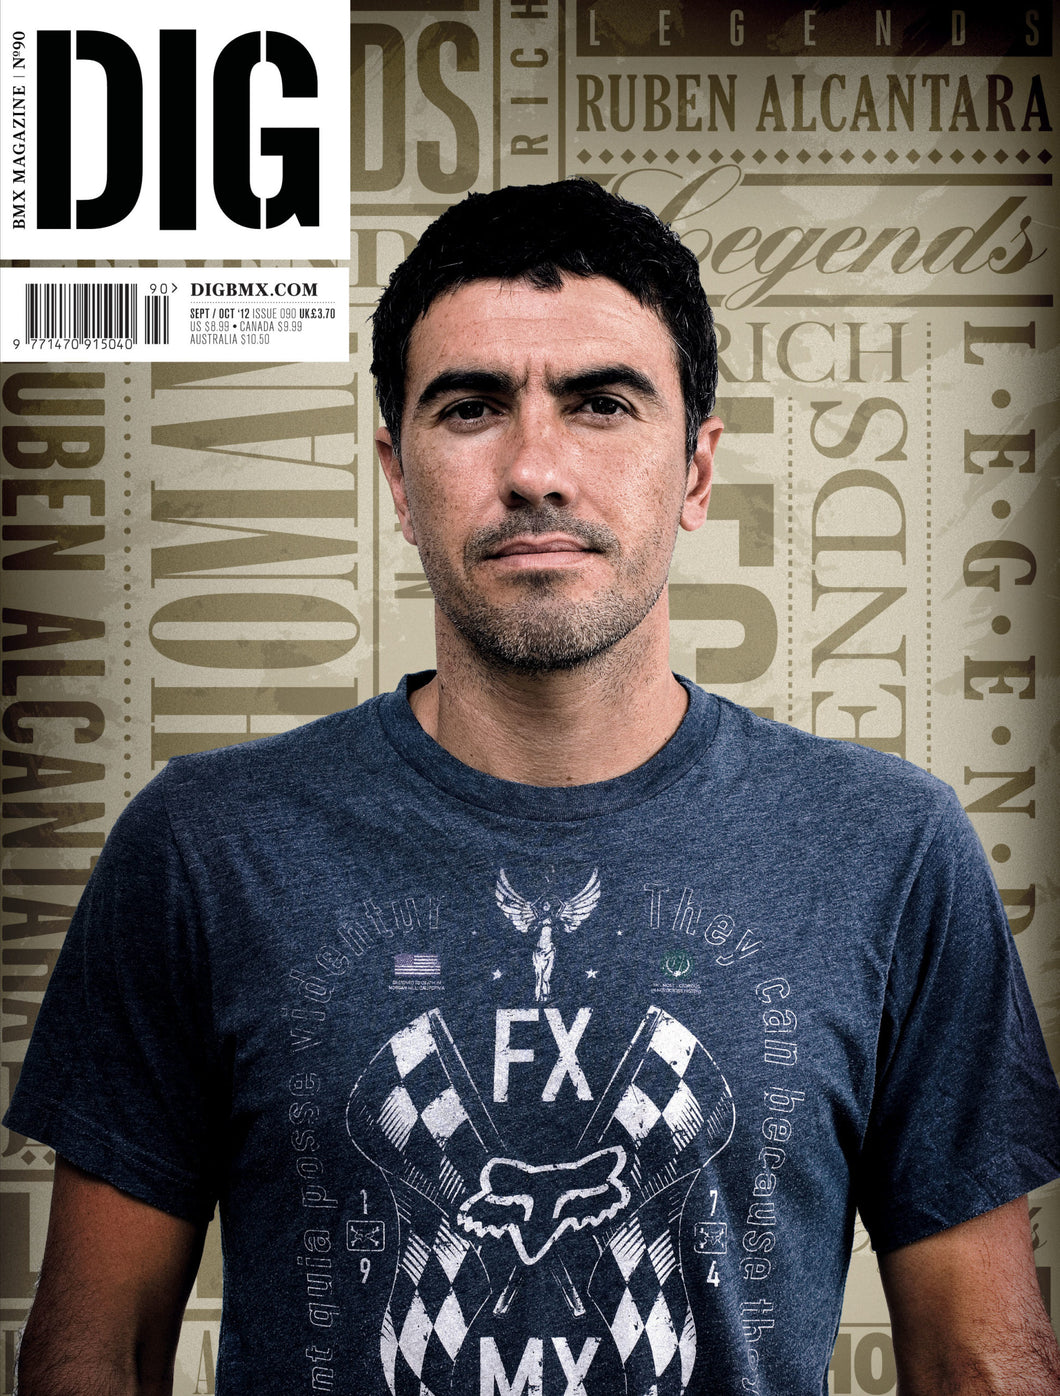 DIG ISSUE 90 - Ruben Alcantara Cover